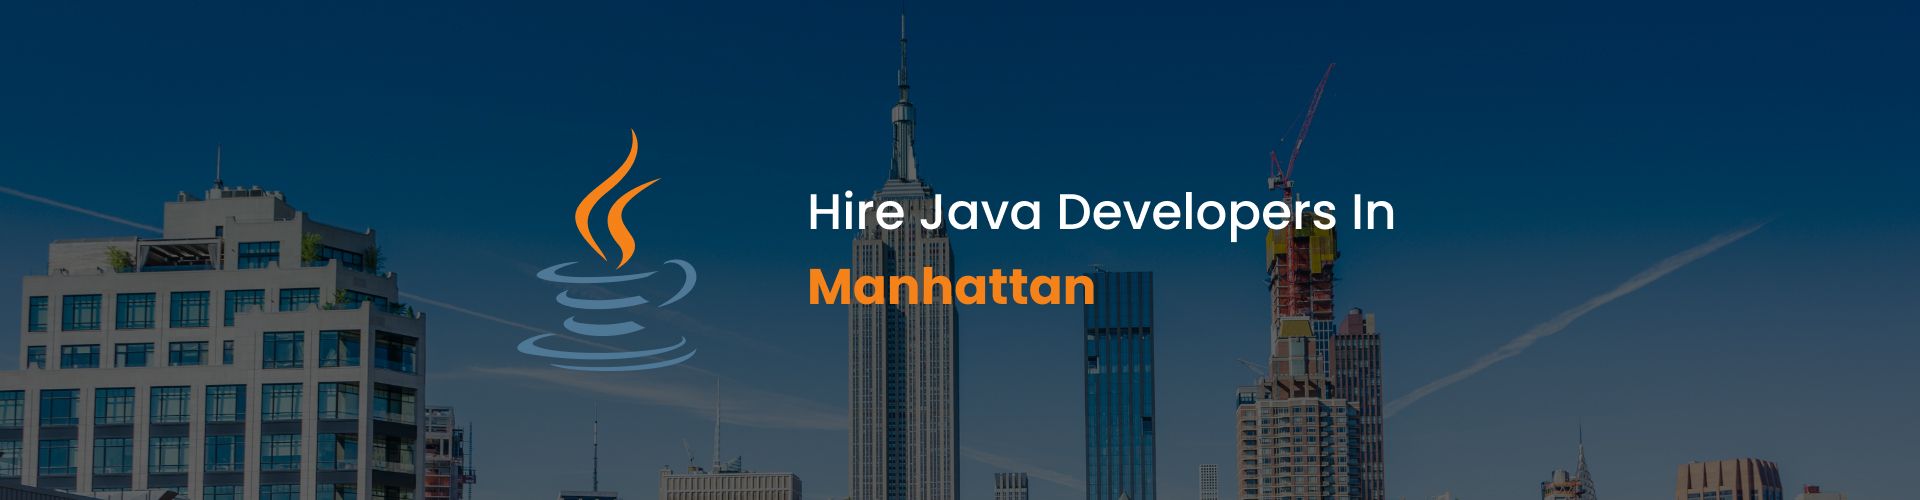 hire java developers in manhattan